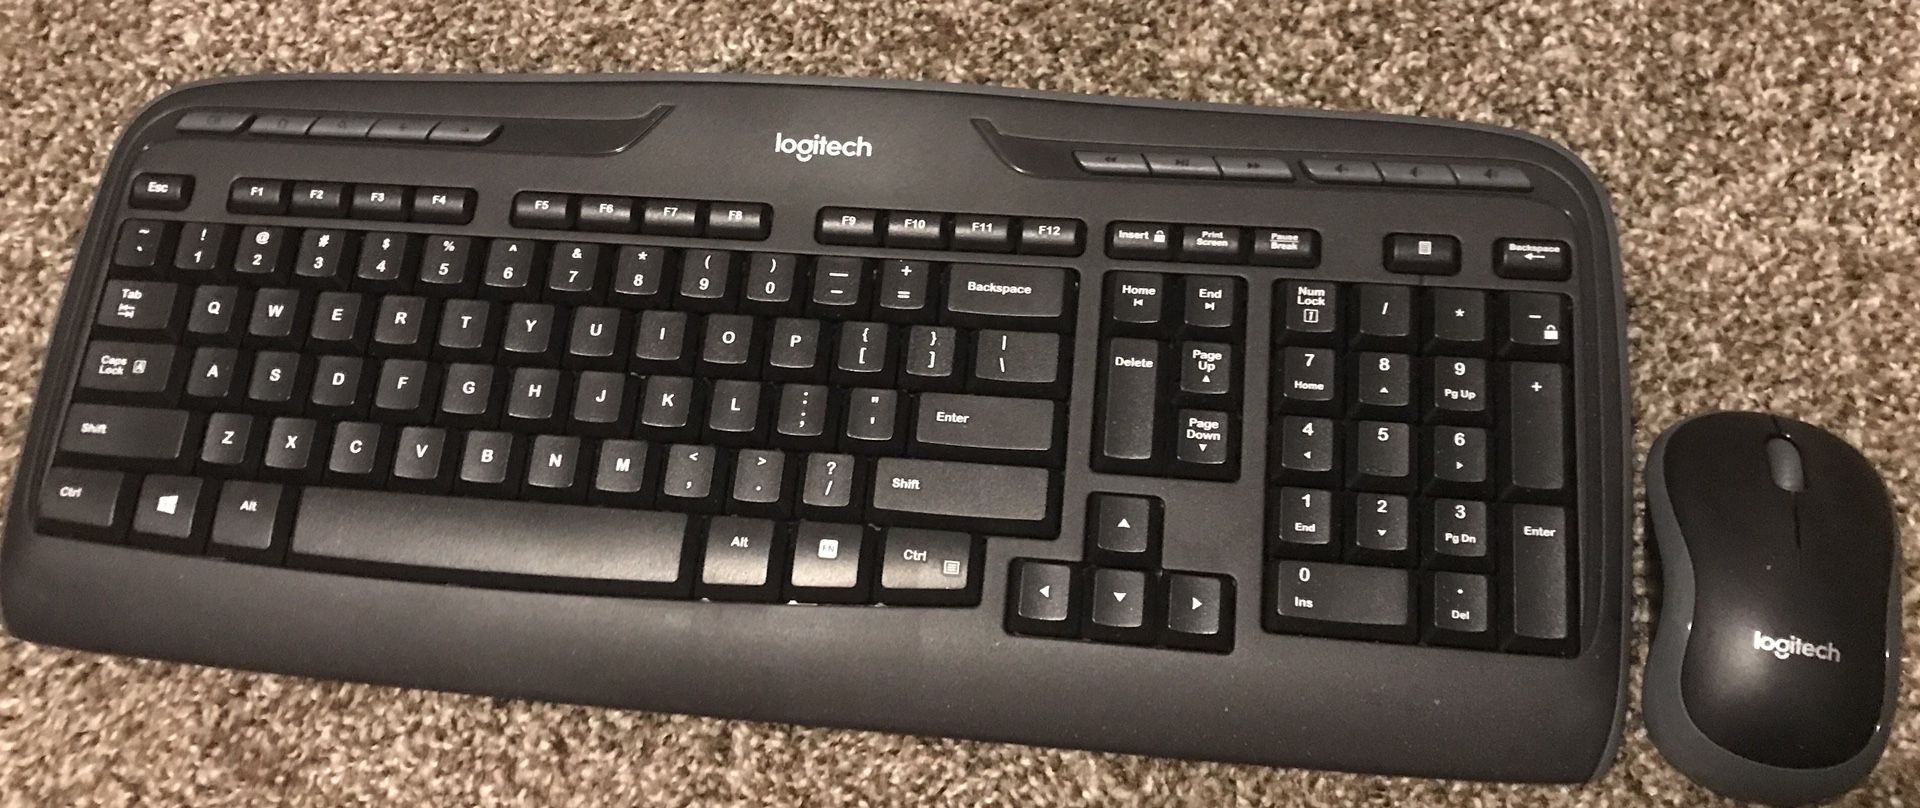 Logitech keyboard with wireless mouse